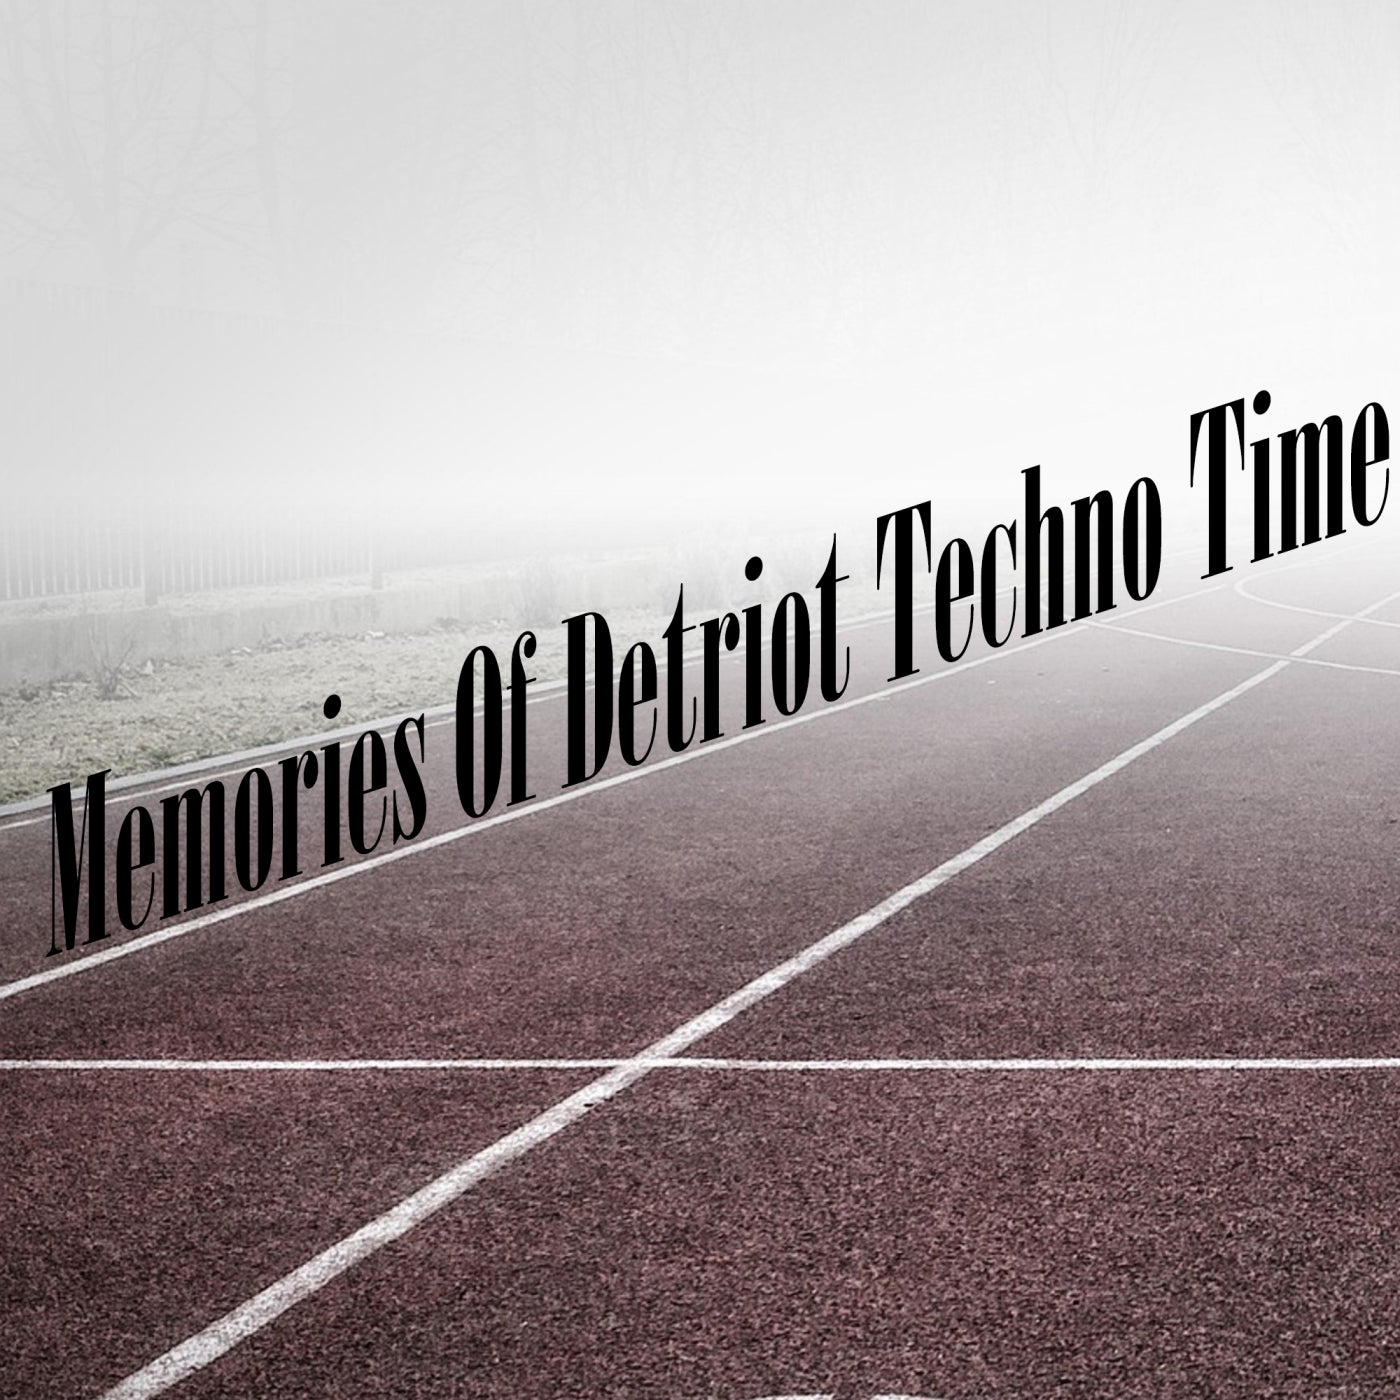 Memories Of Detriot Techno Time